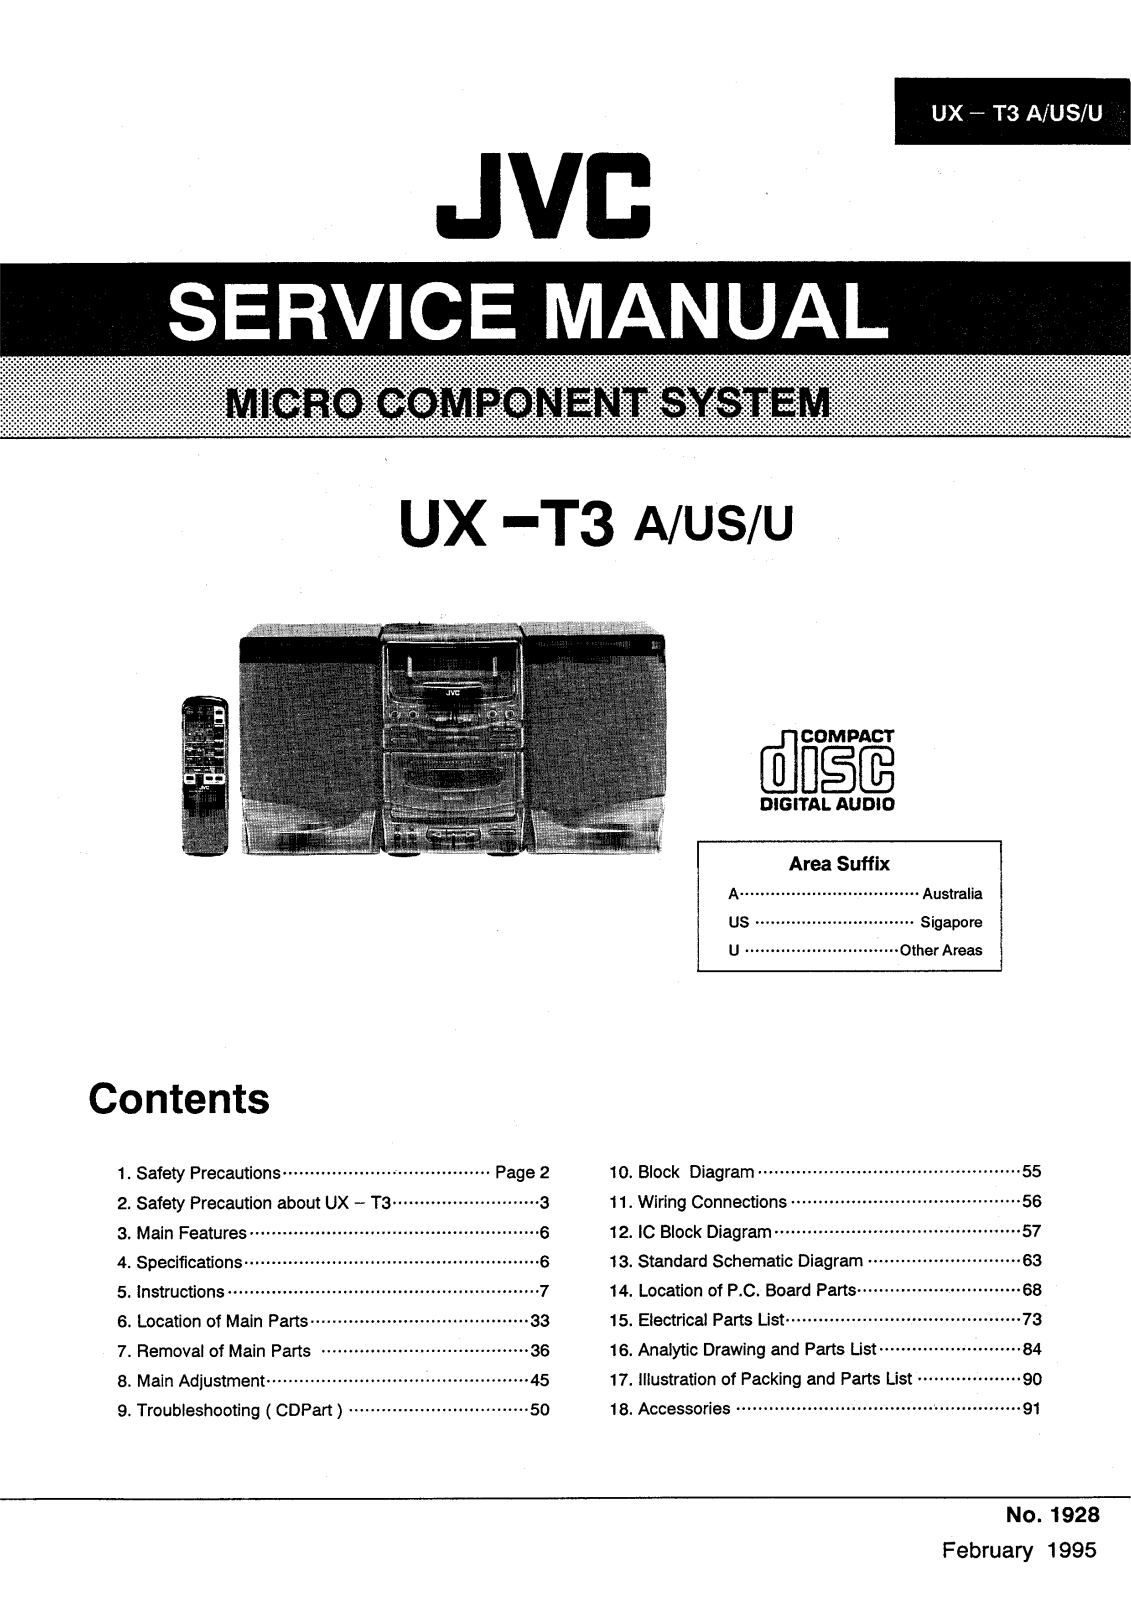 JVC UXT-3 Service manual